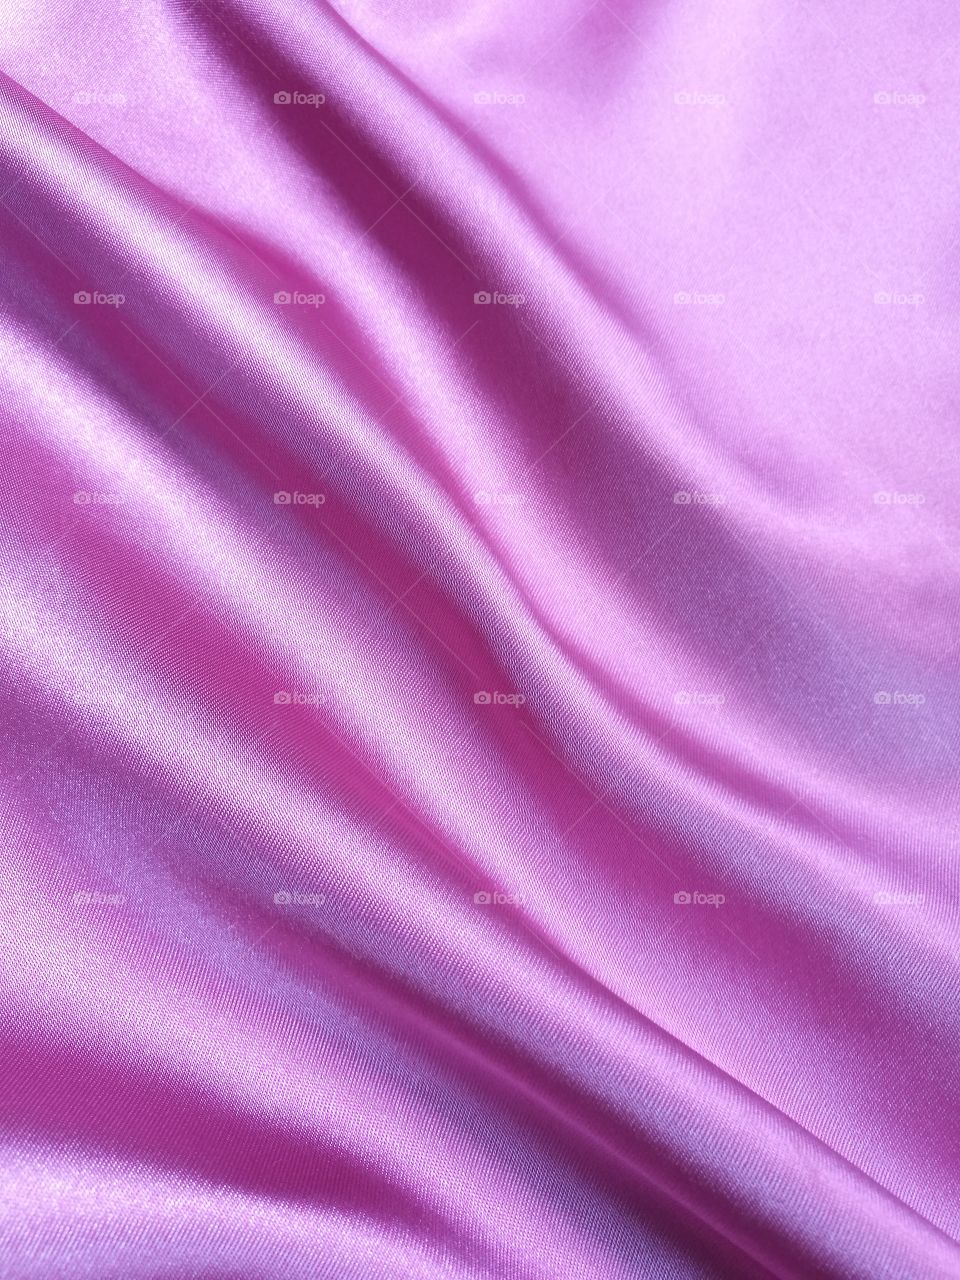 Background of beautiful pink satin fabric texture.